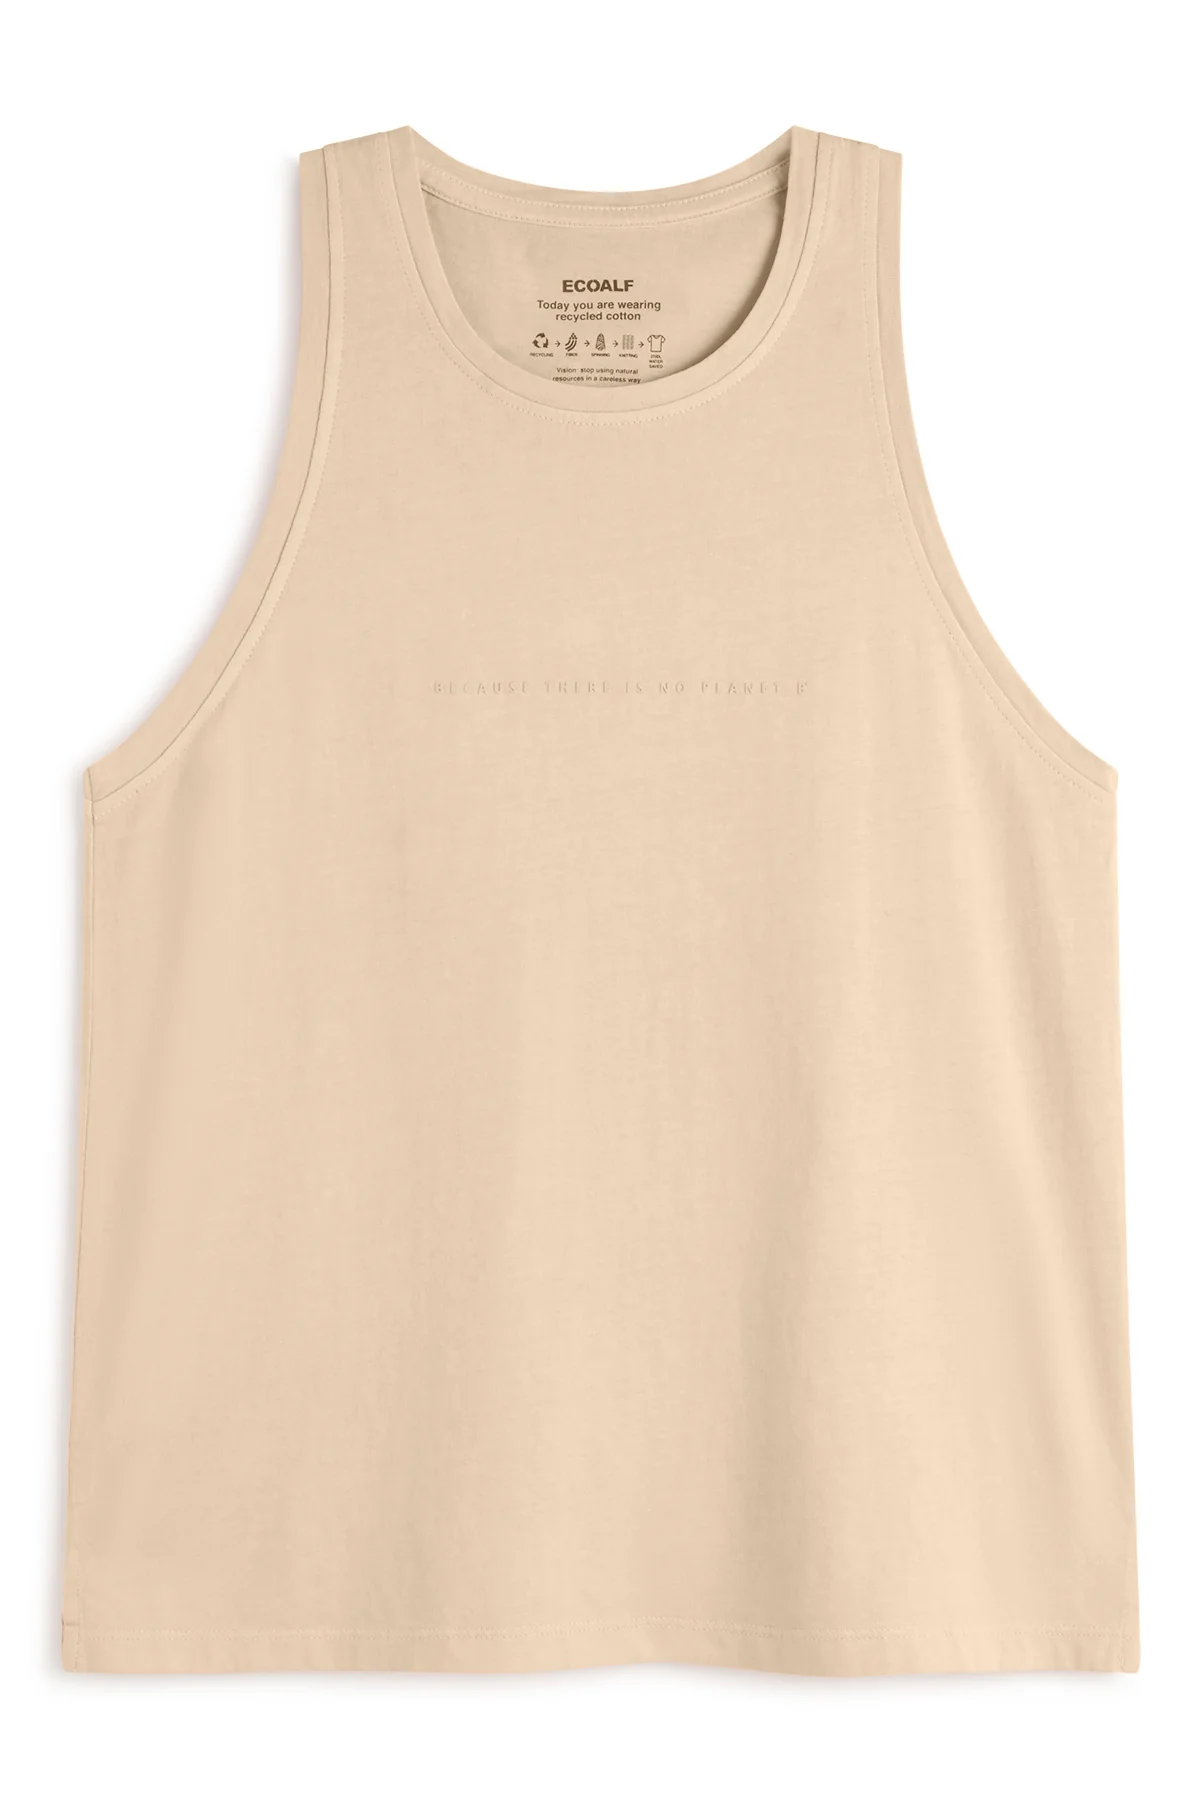 ECOALF camiseta sin mangas color camel - 4